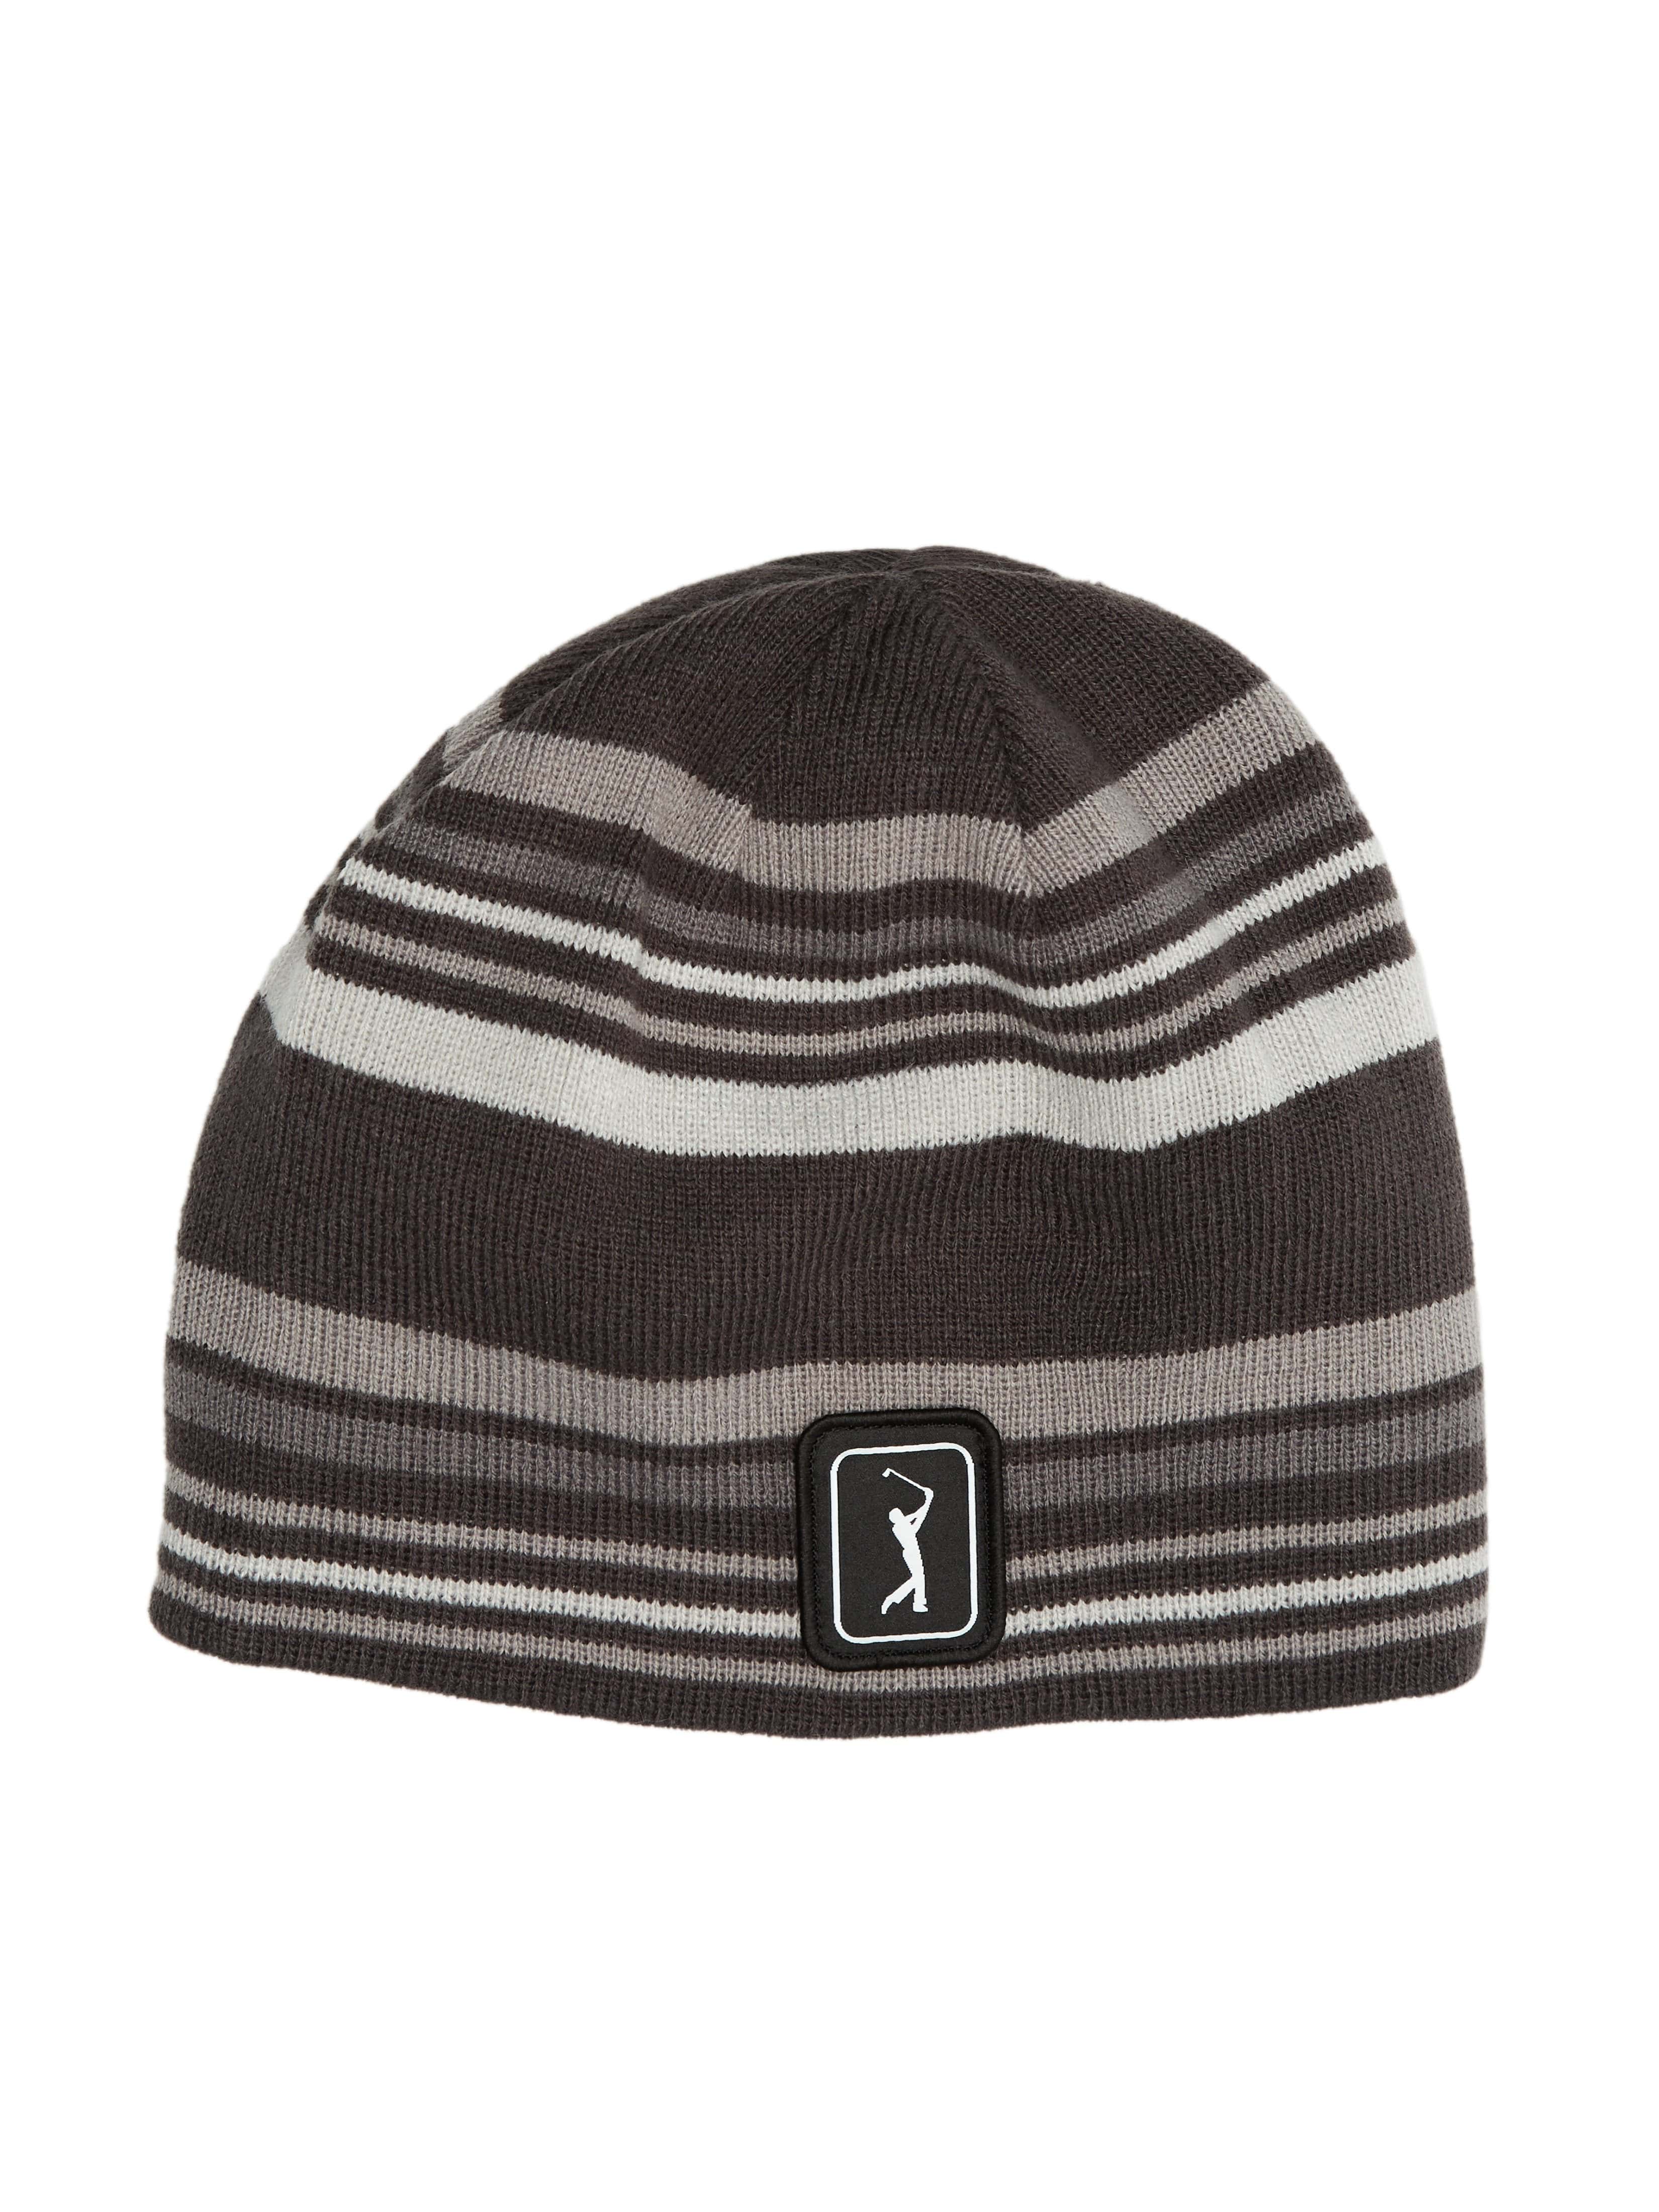 PGA TOUR Apparel Mens Striped Reversible Beanie Hat, Asphalt Gray, 100% Acrylic | Golf Apparel Shop